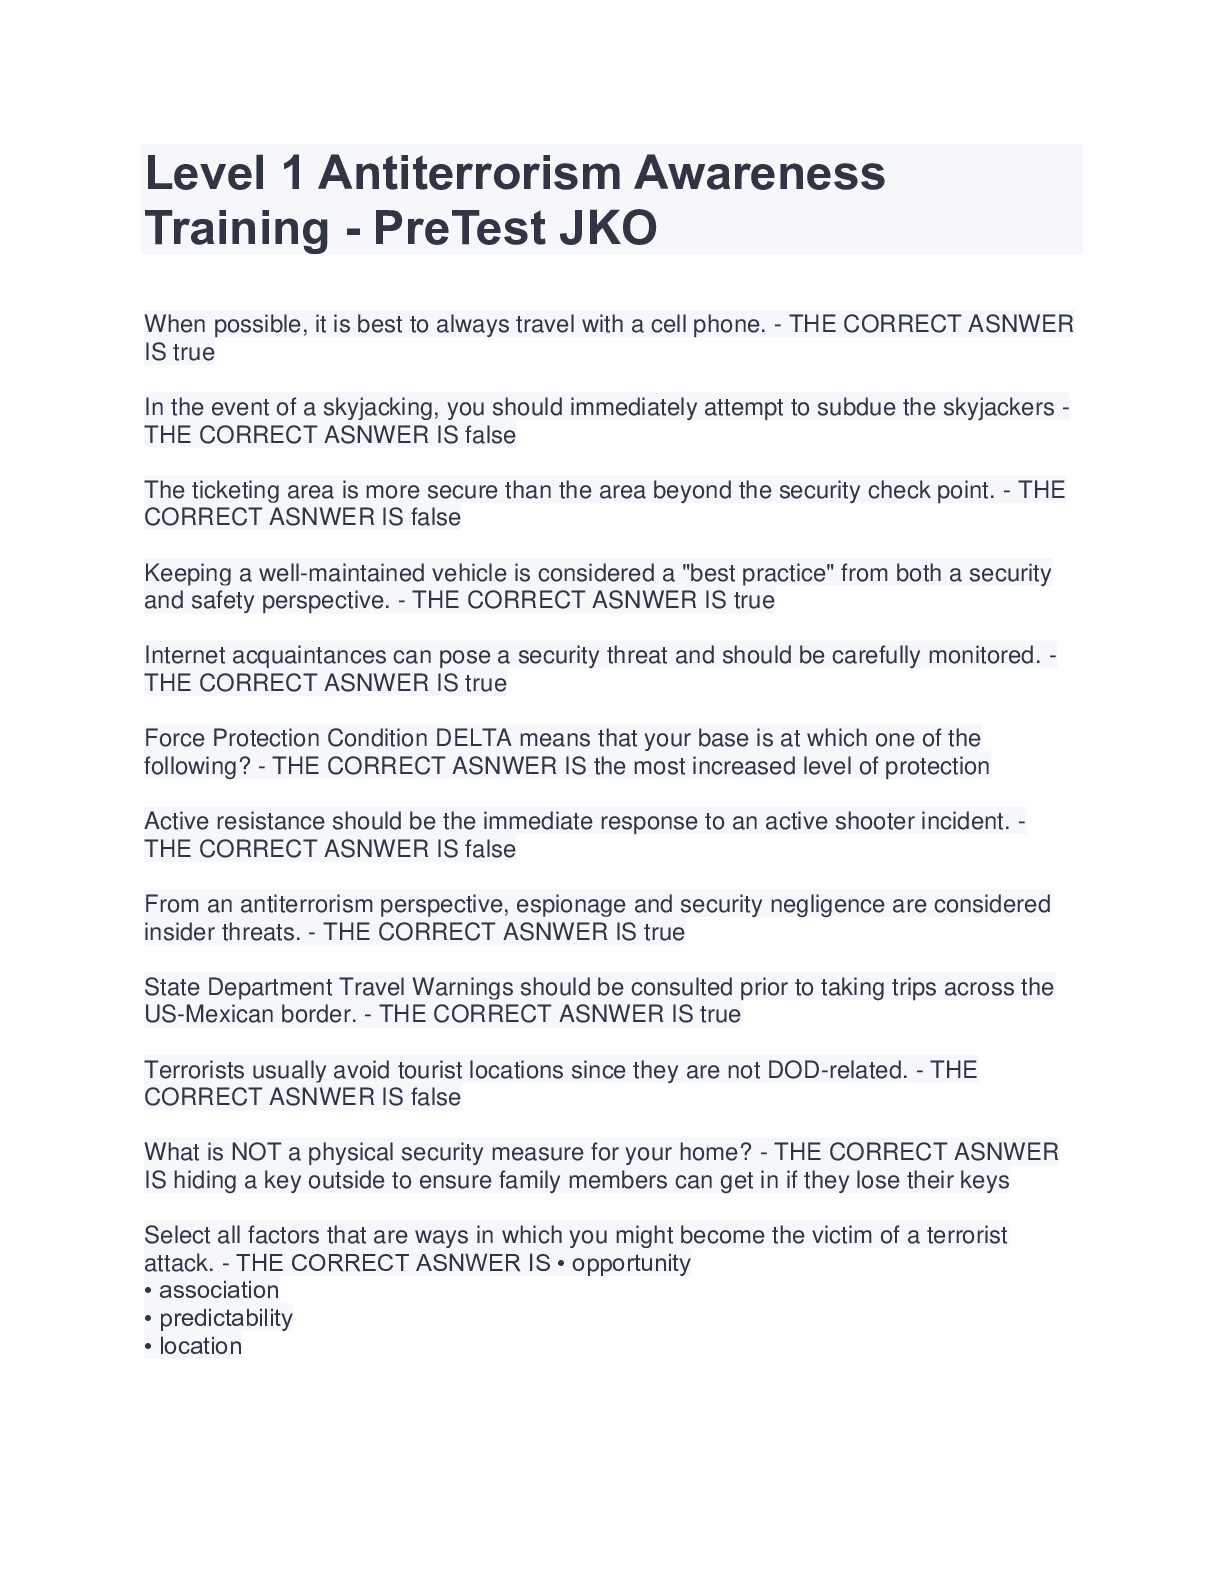 Level 1 Antiterrorism Awareness Training   PreTest JKO 